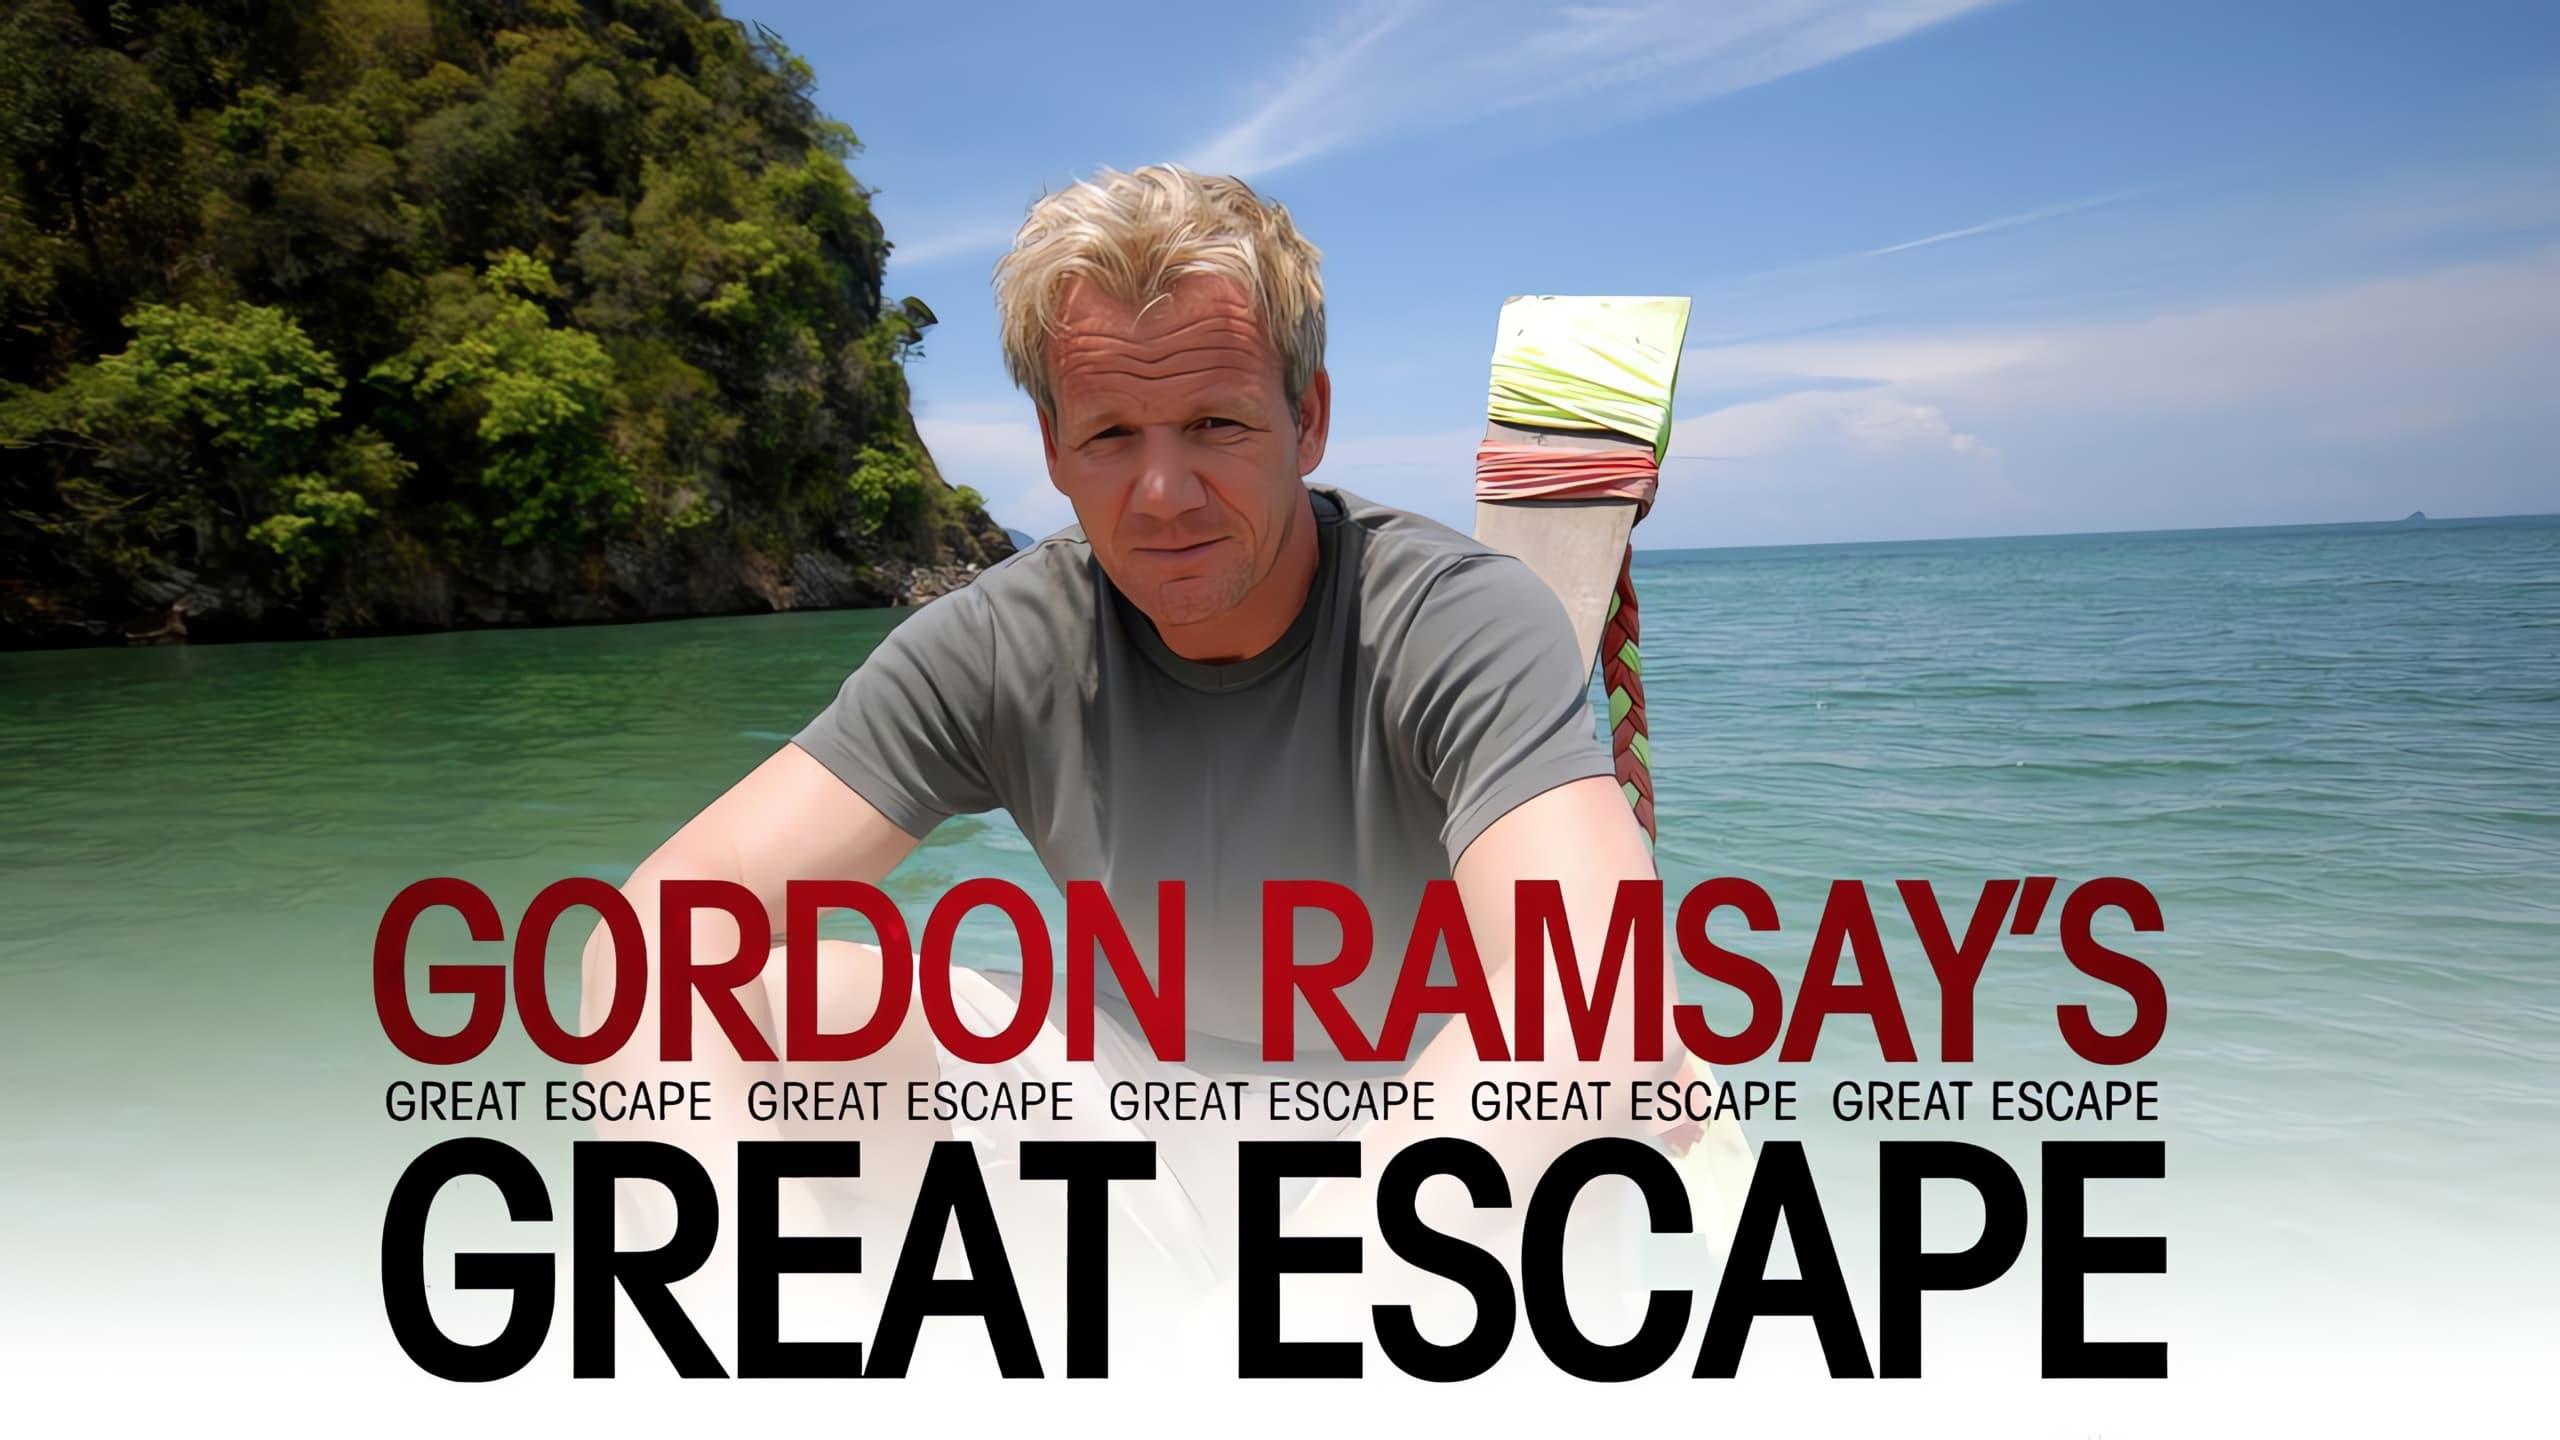 Gordon's Great Escape backdrop